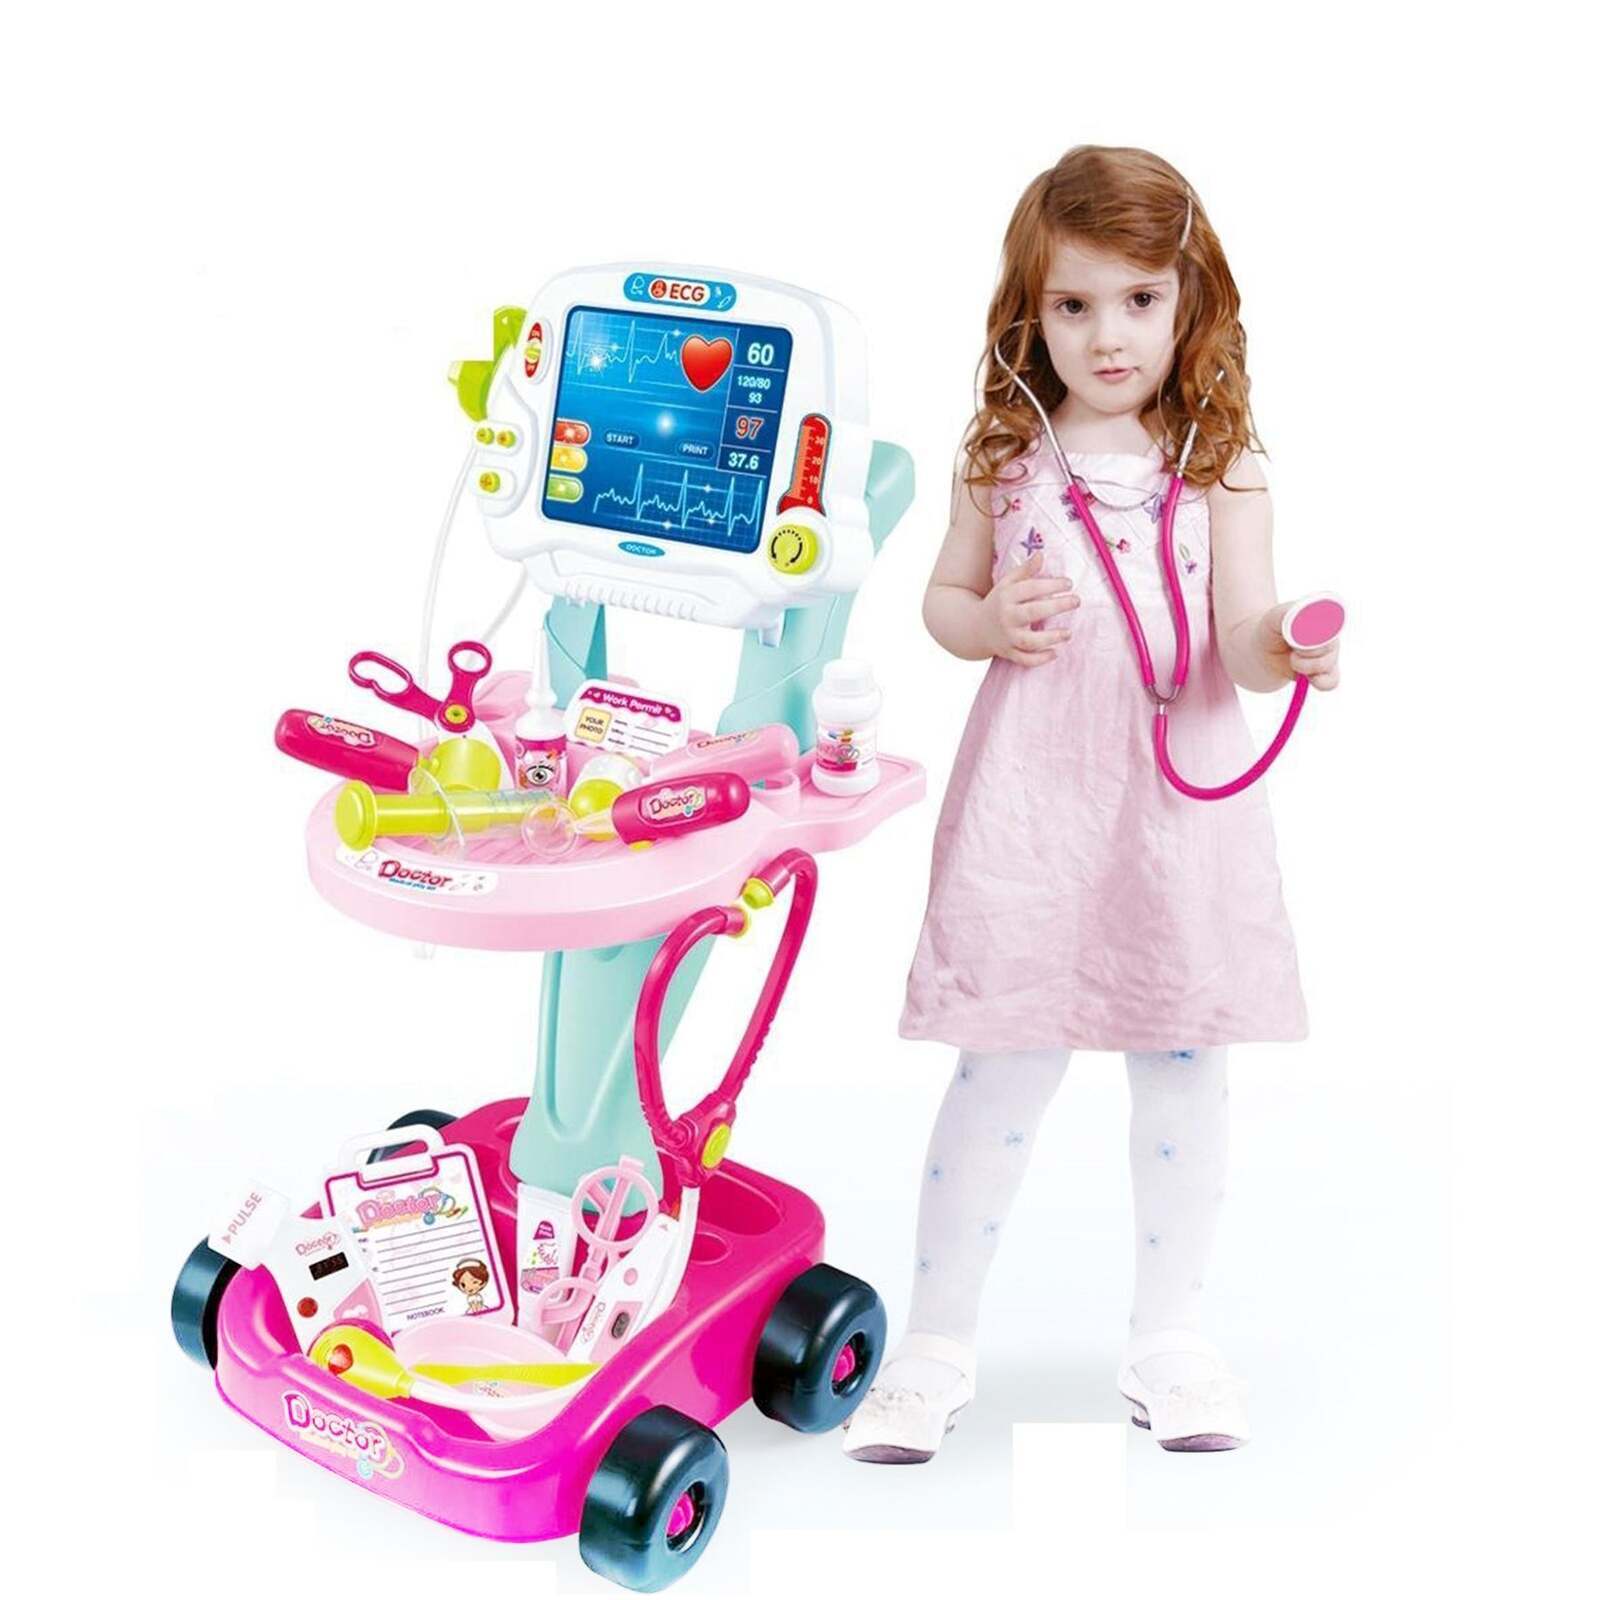 Kids Children's Doctors Medical Cart & ECG Machine for Toddler Play - 0